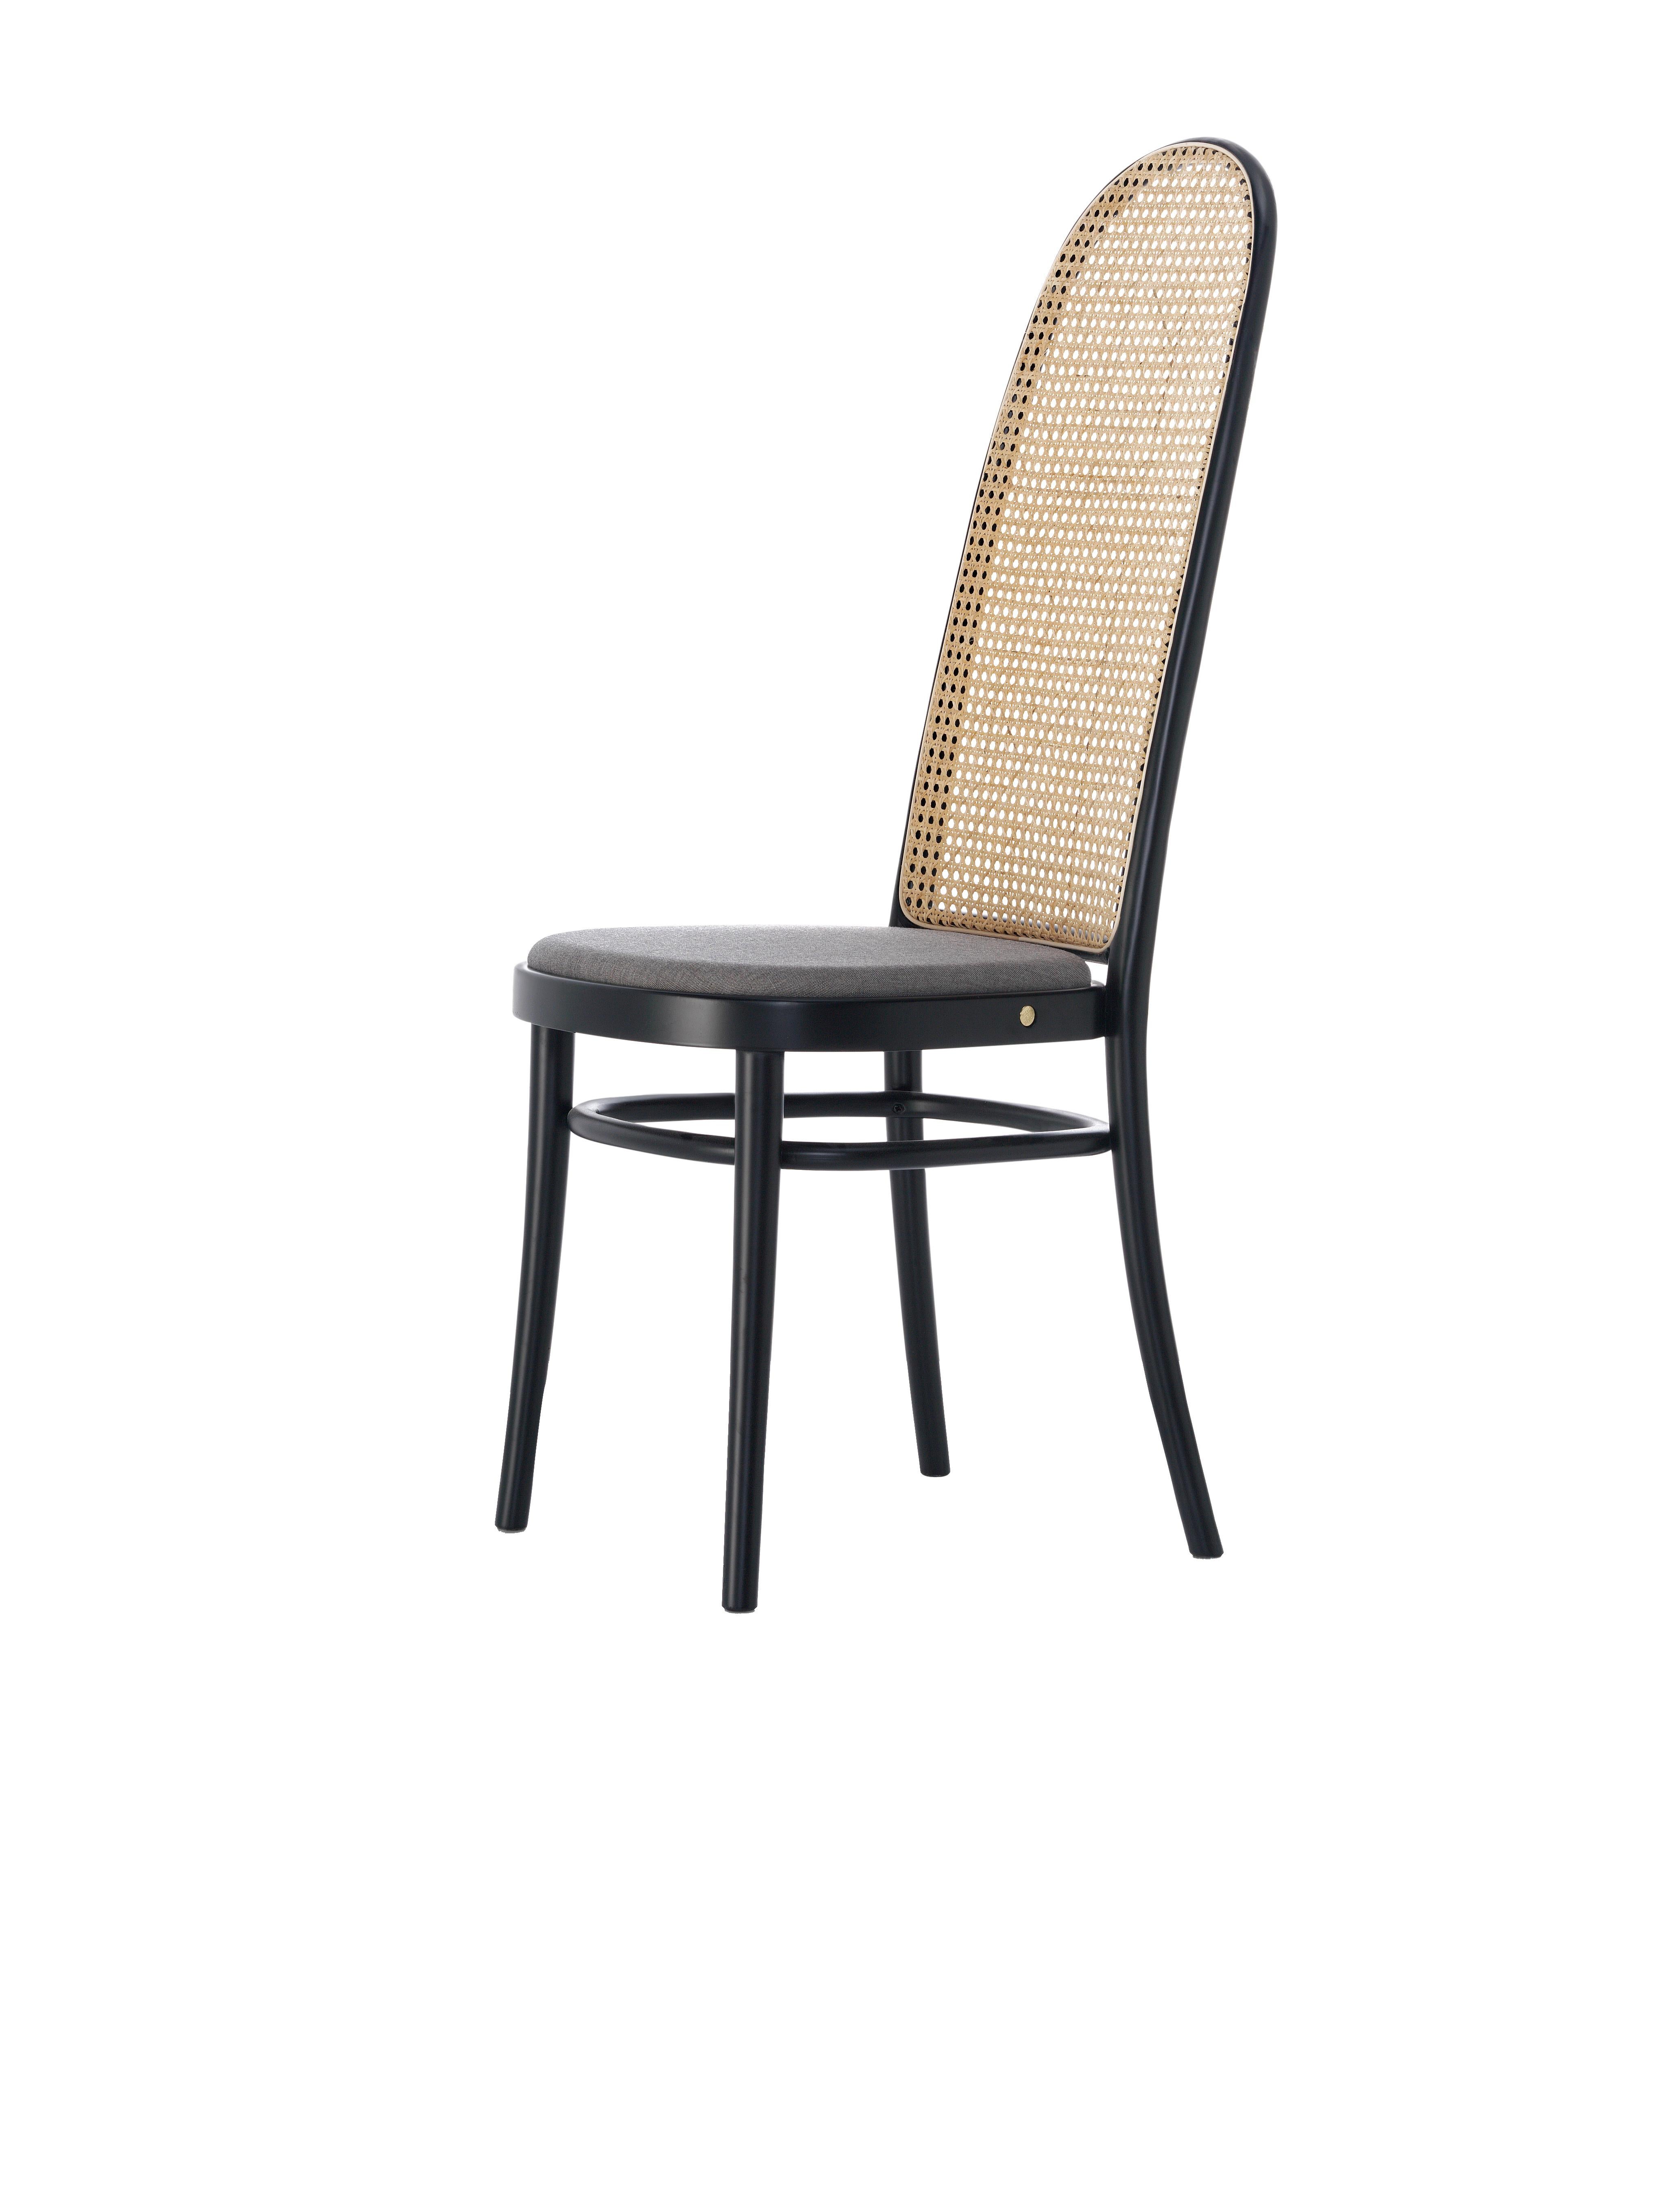 Modern Gebrüder Thonet Vienna GmbH Morris High Back Black Chair with Upholstered Seat For Sale